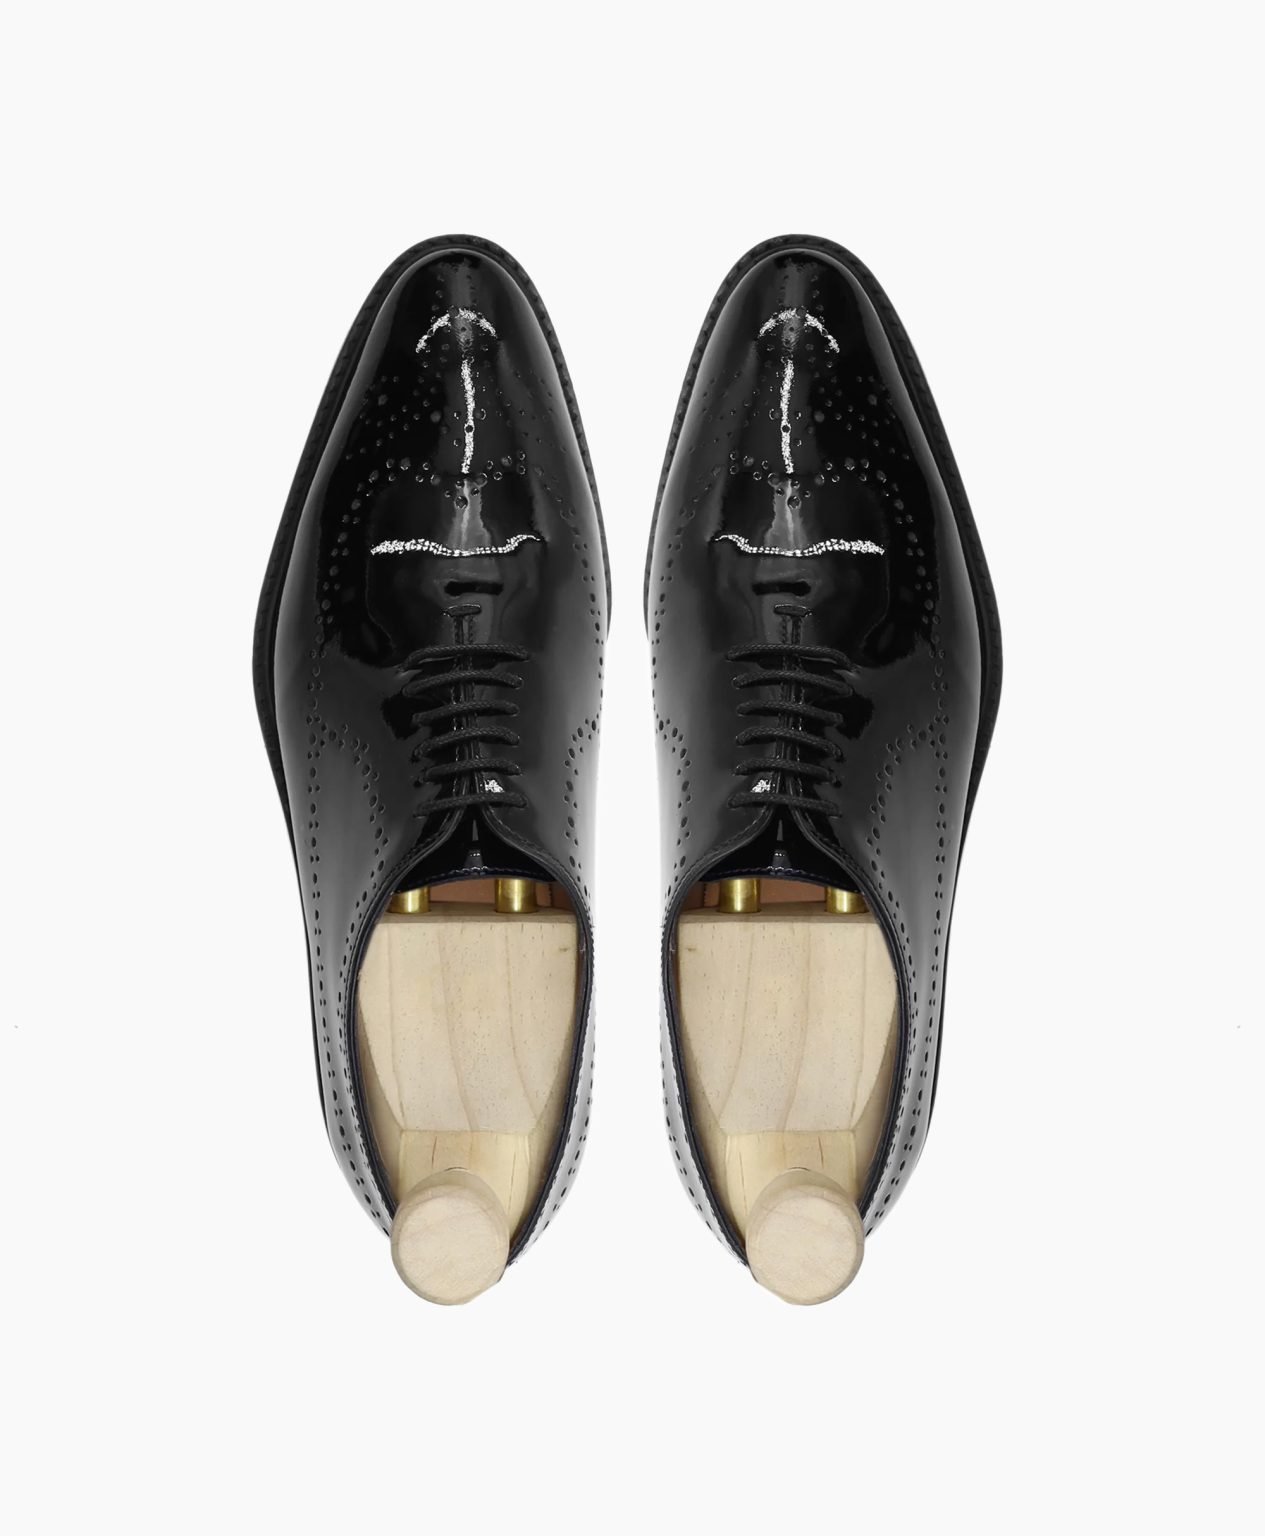 eastbourne-wholecut-black-patent-leather-shoes-image202